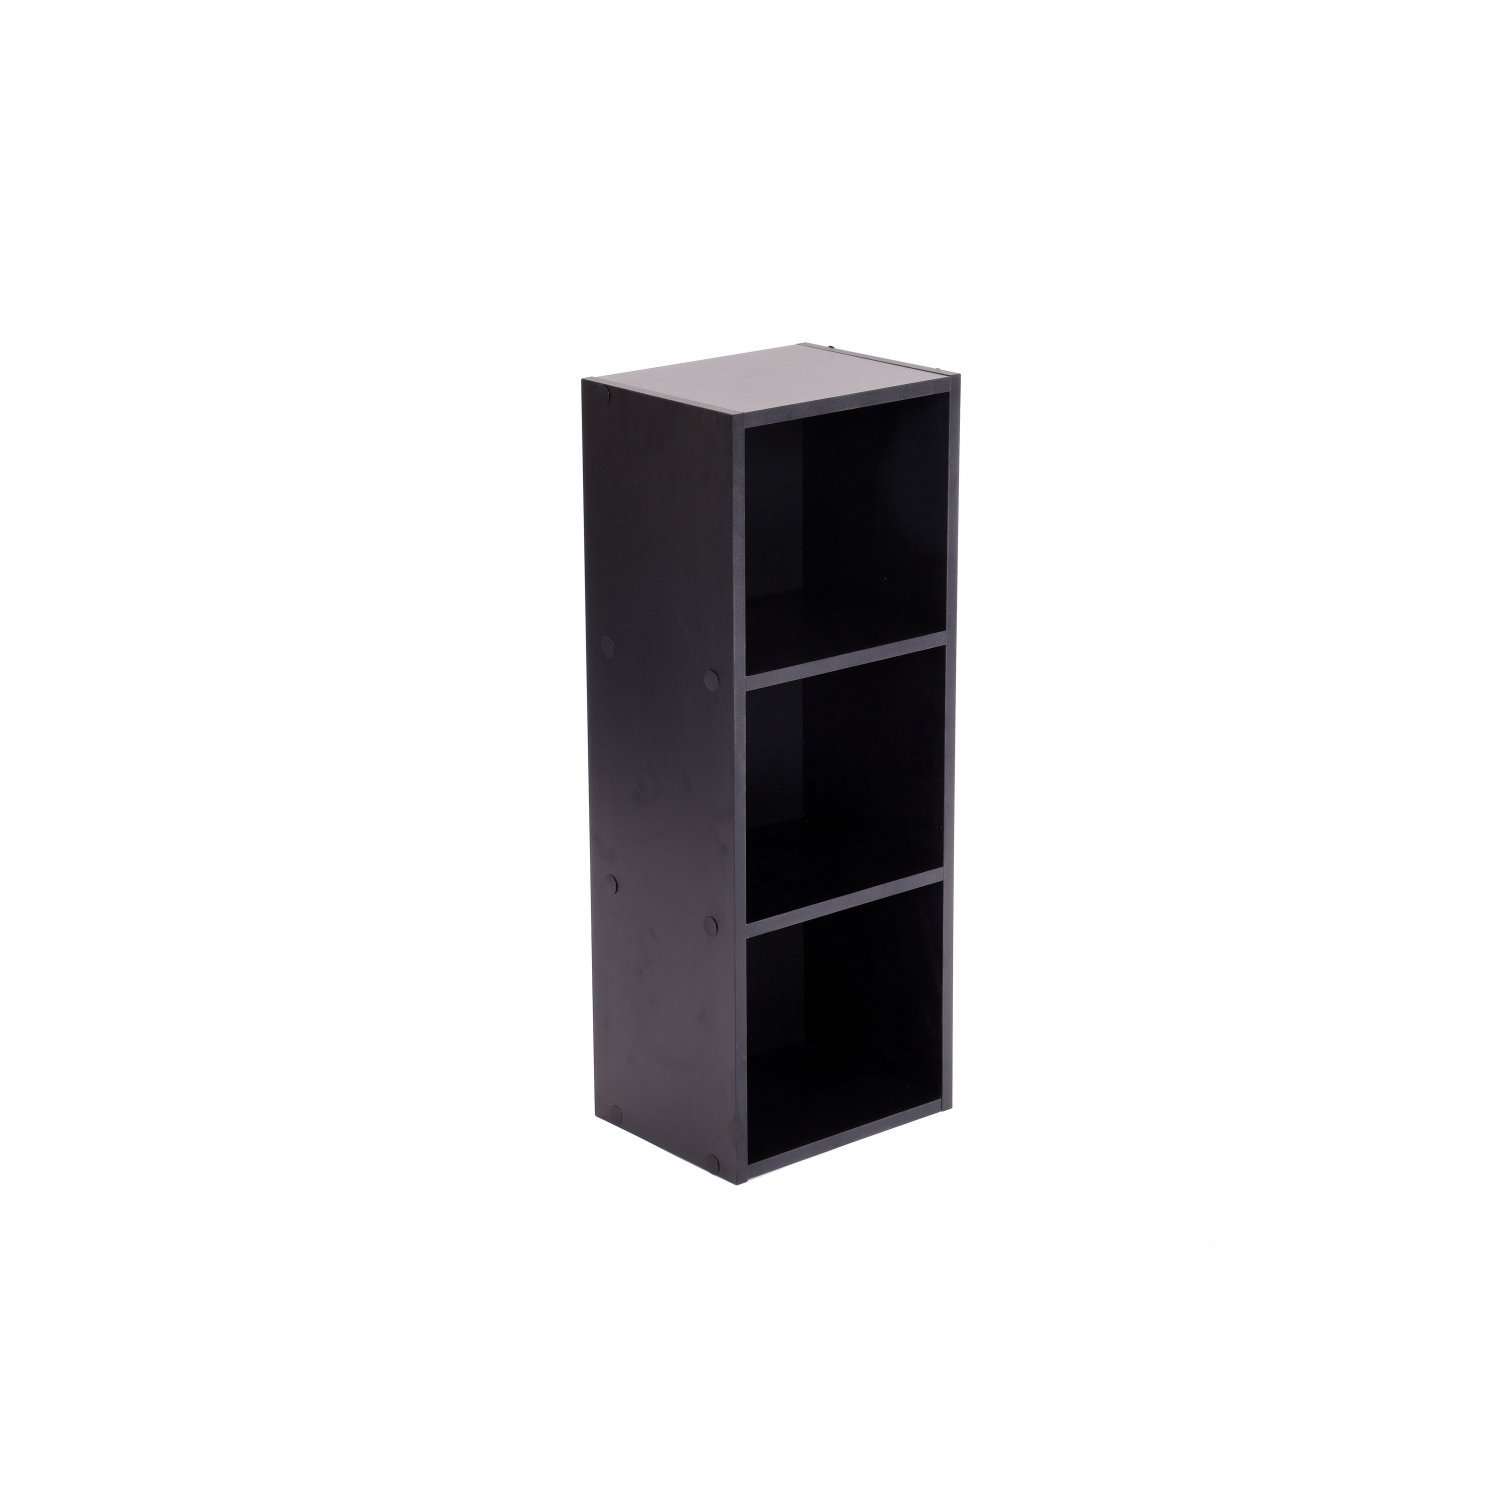 3 Tier Wooden Shelf Black Bookcase Shelving Storage Display Rack